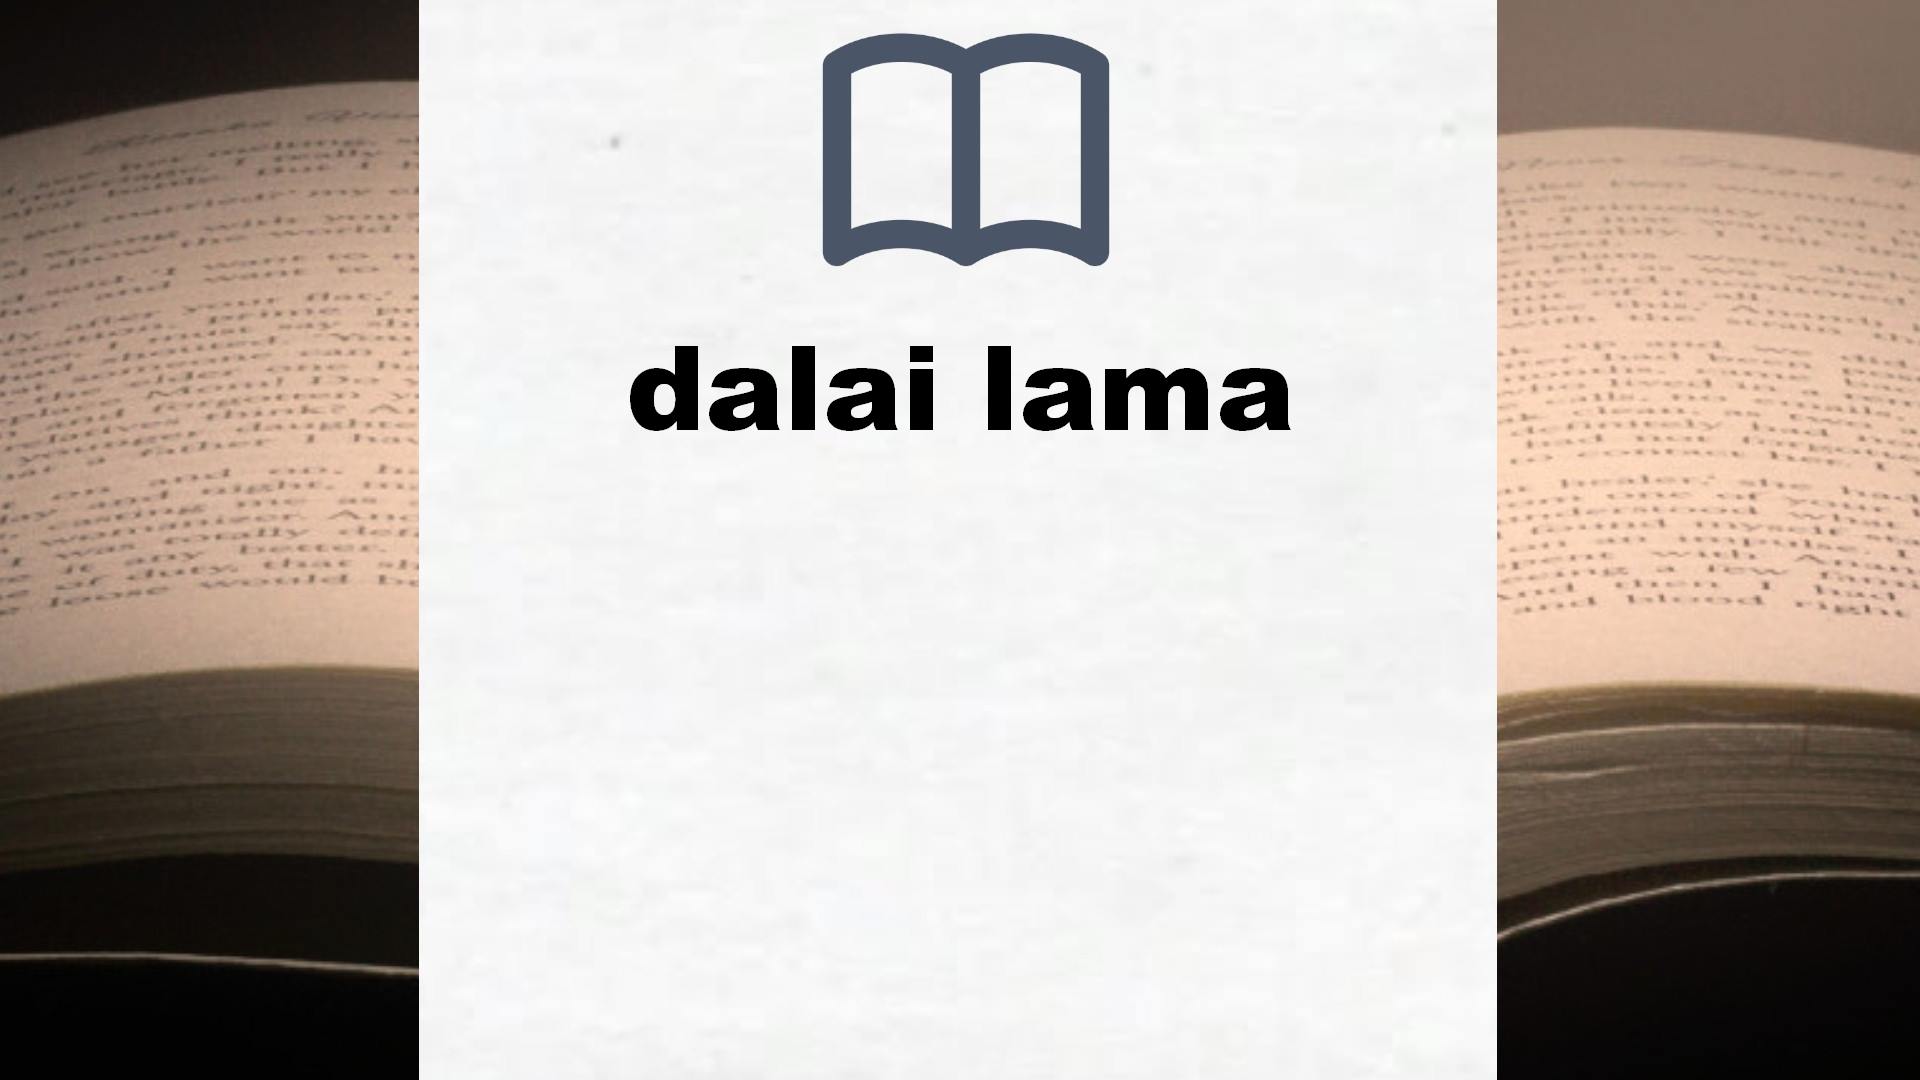 Libros sobre dalai lama